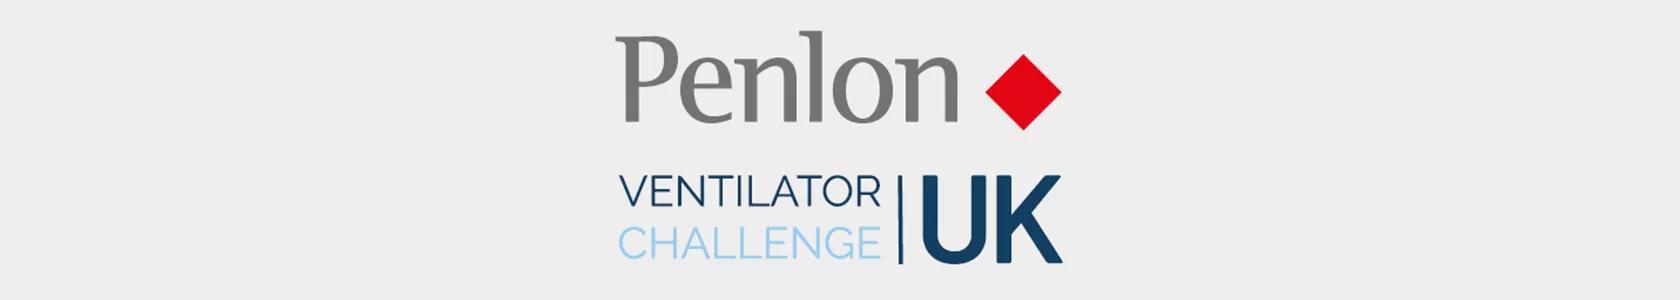 Penlon Ventilator Challenge UK Banner